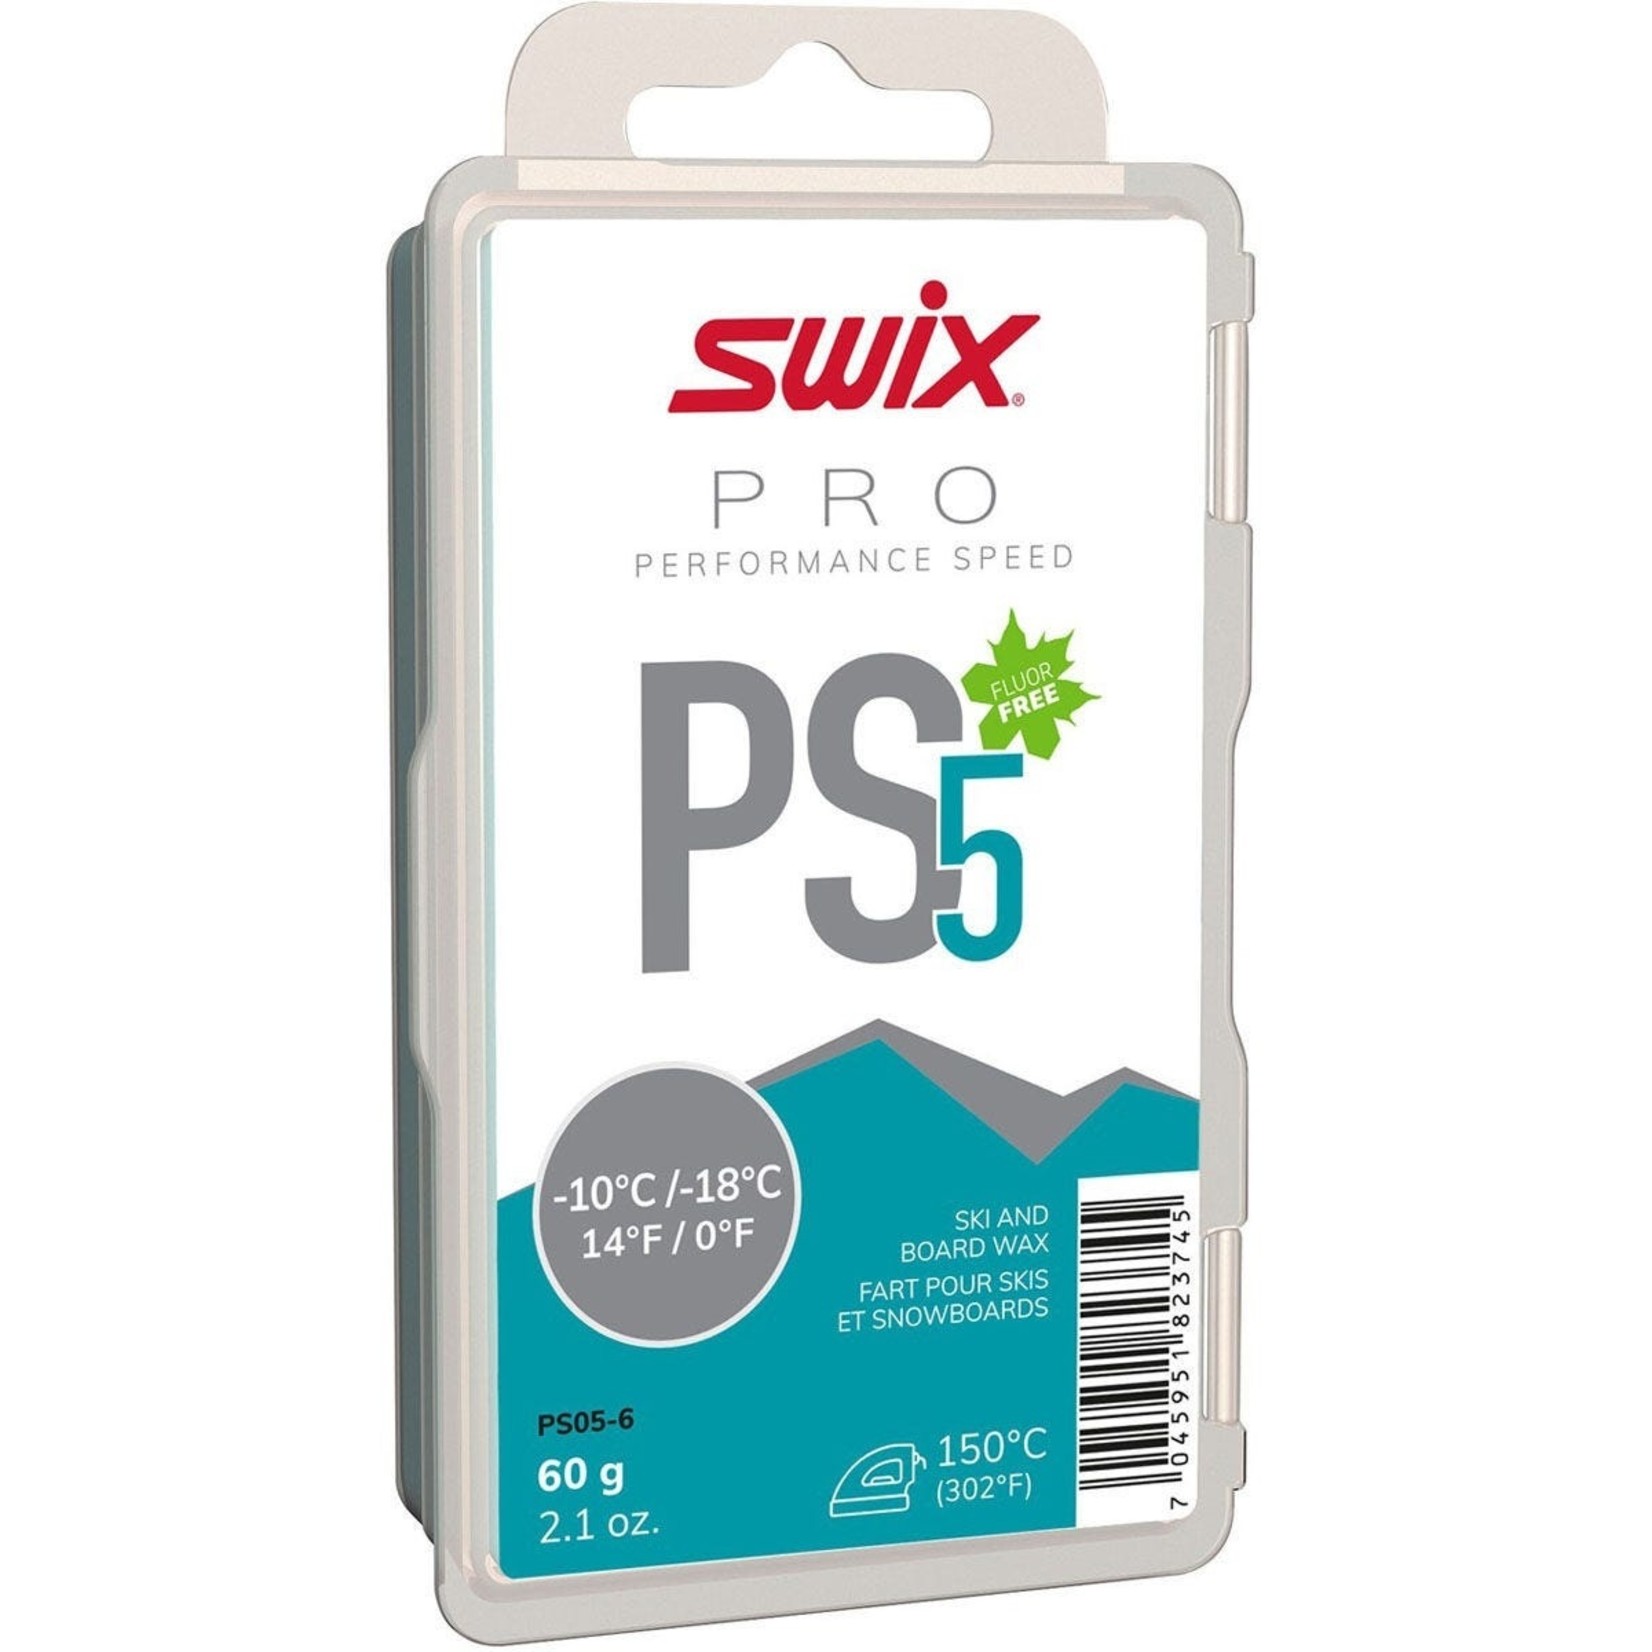 Swix "PS5 Turquoise, -10°C/-18°C, 60g"